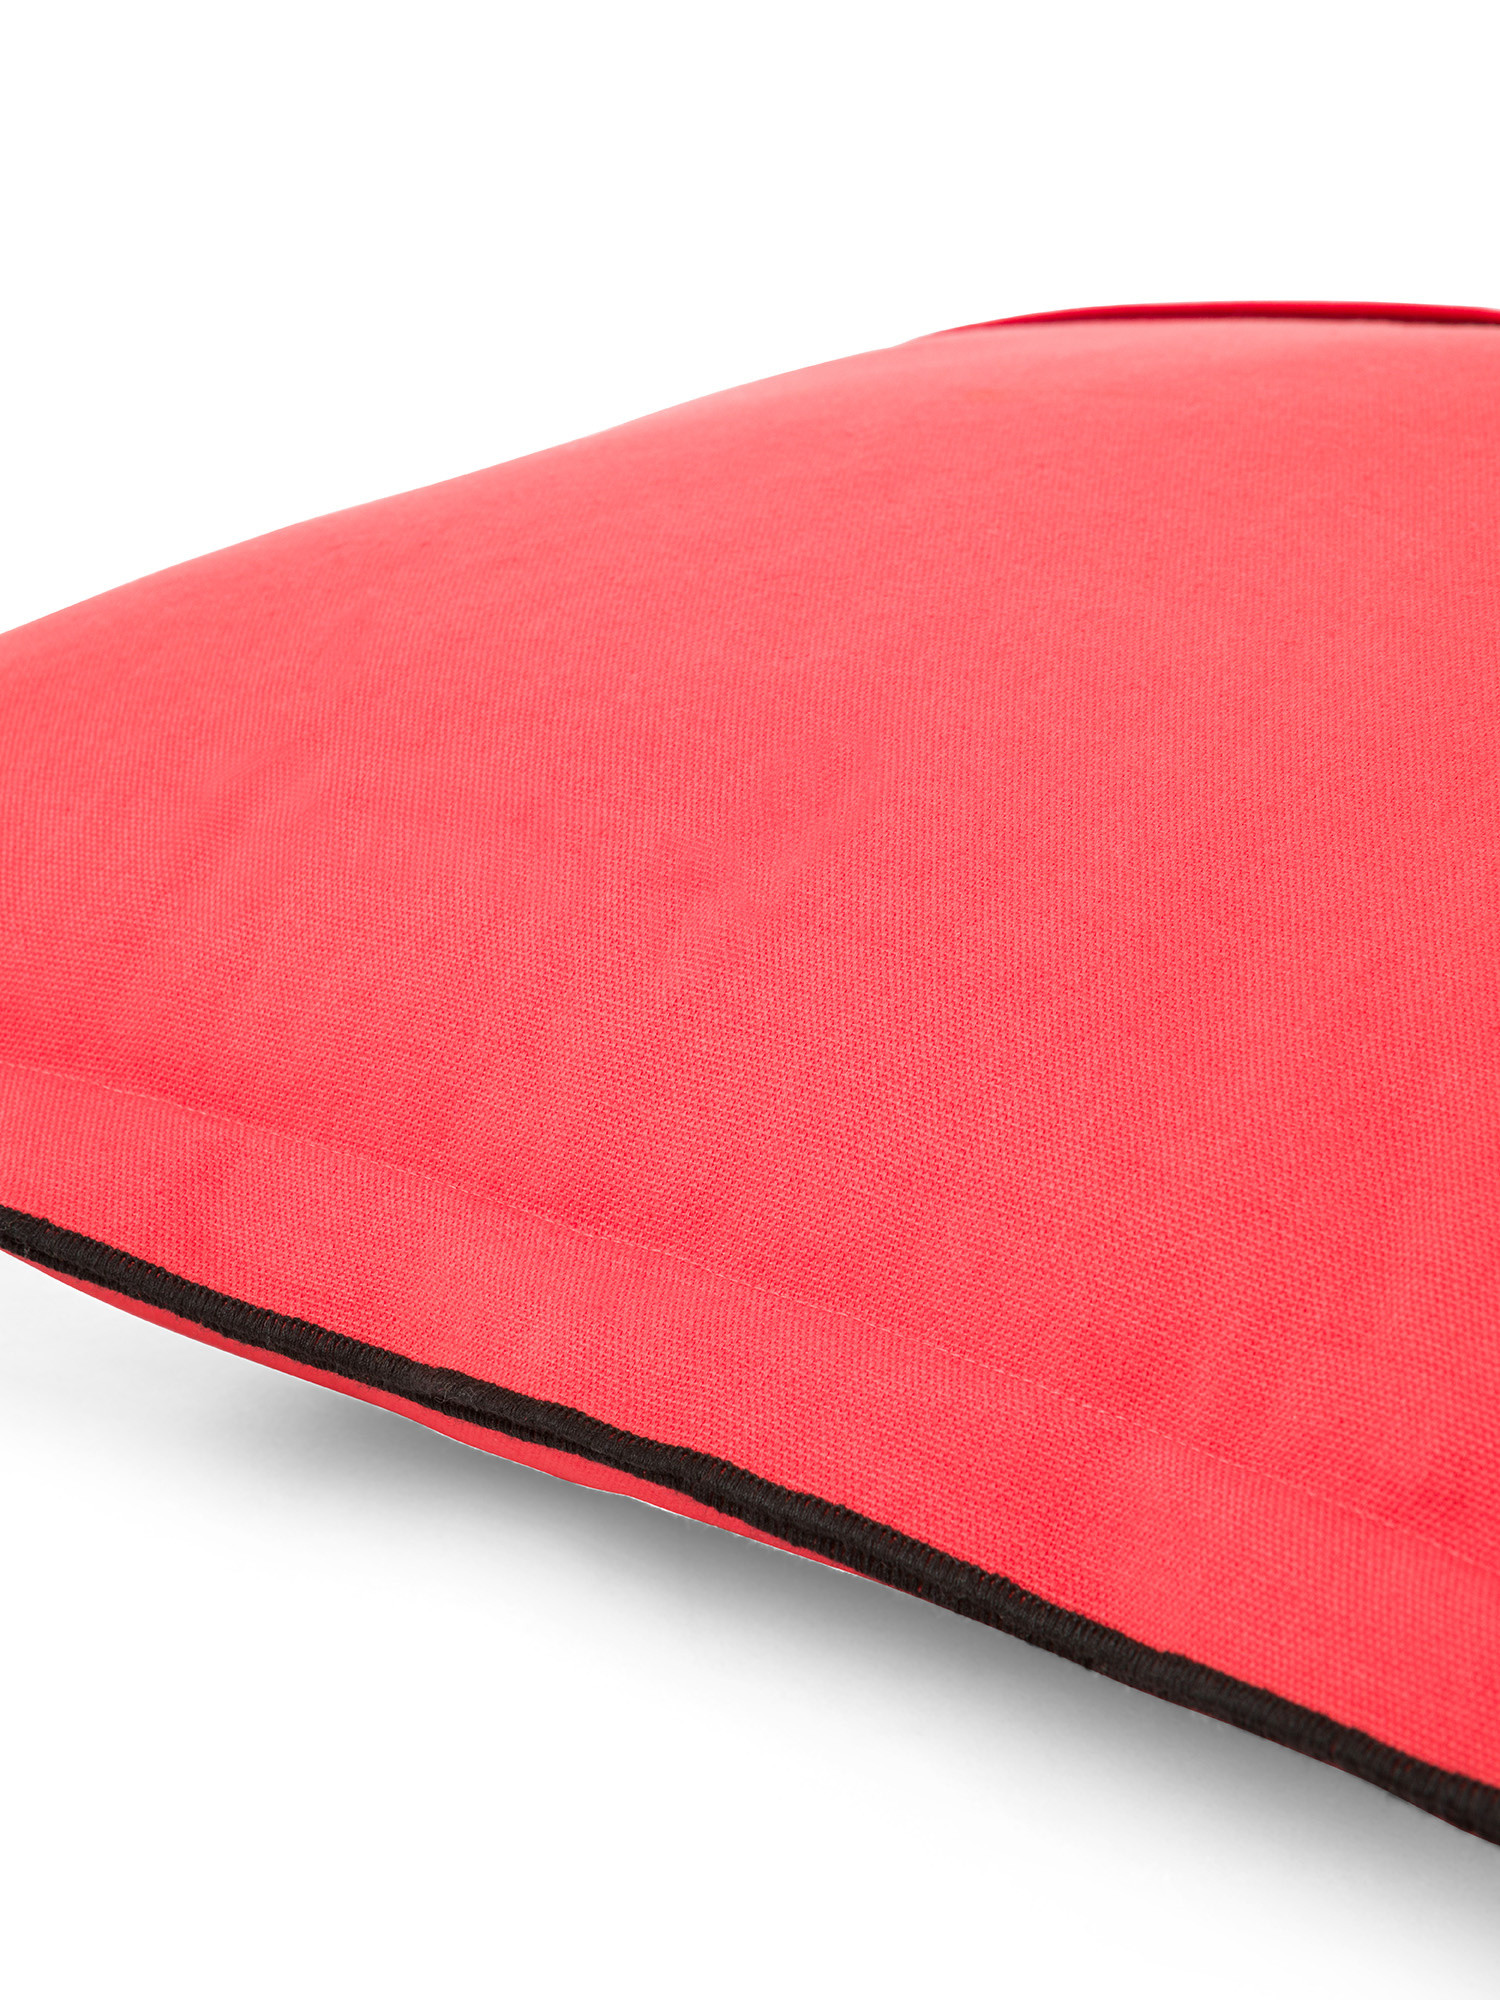 Cuscino cotone con bordo overlock 45x45cm, Rosso, large image number 2